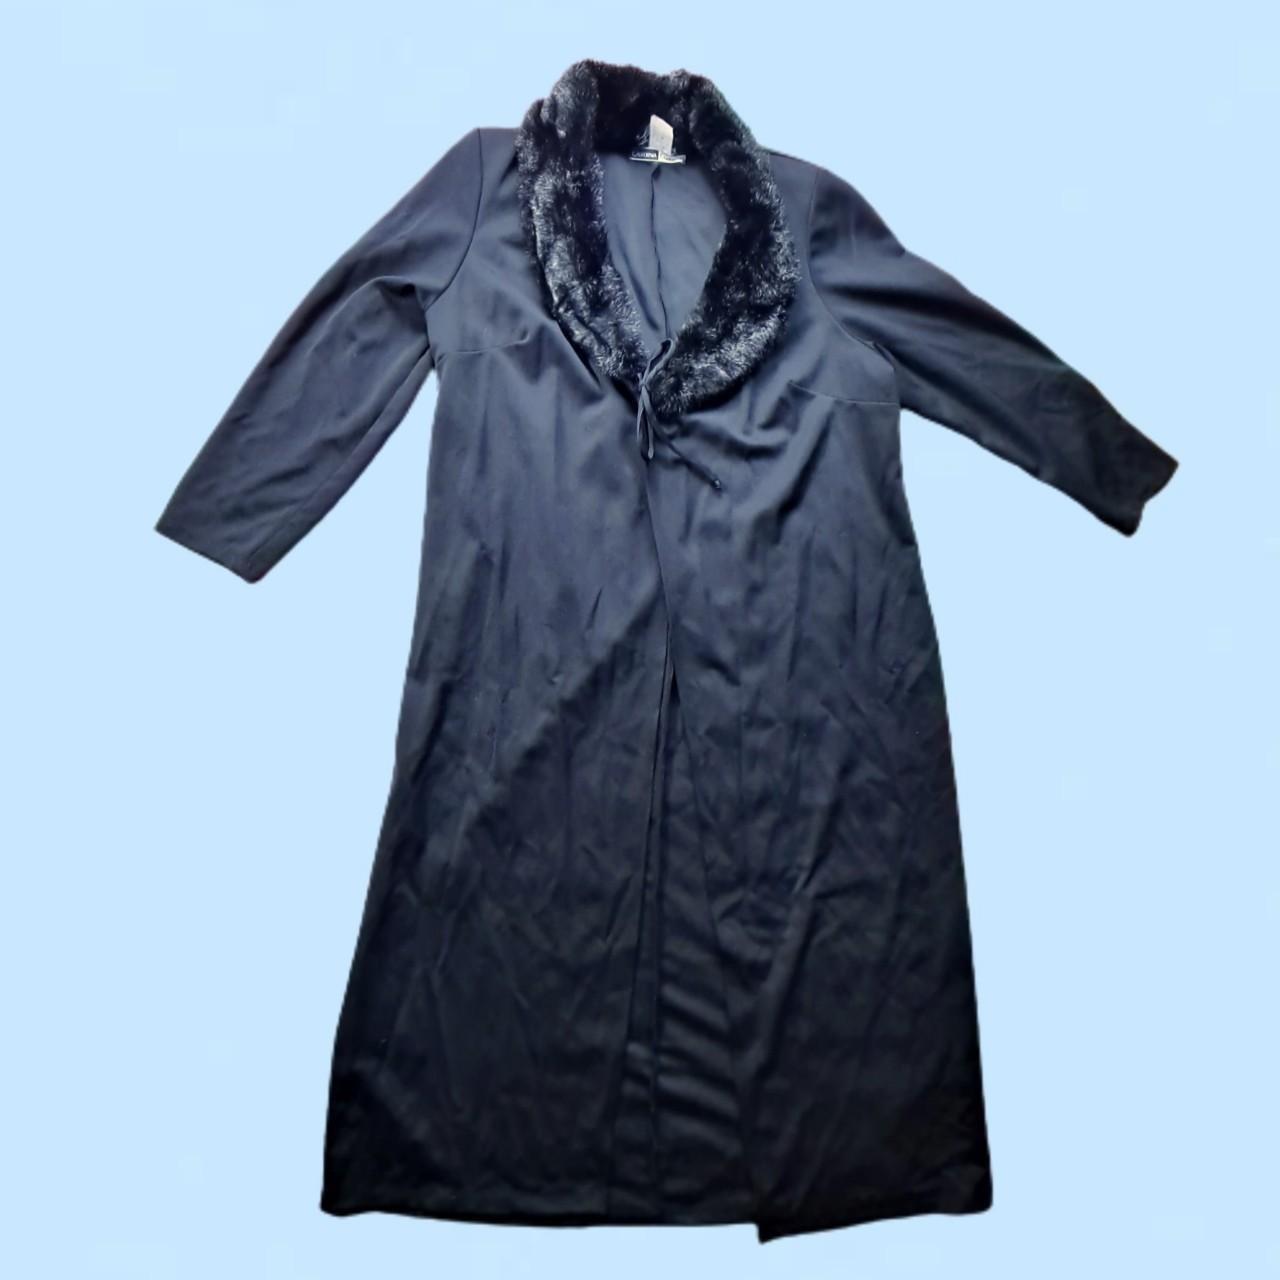 Product Image 2 - Vintage goth duster jacket!
Rare plus